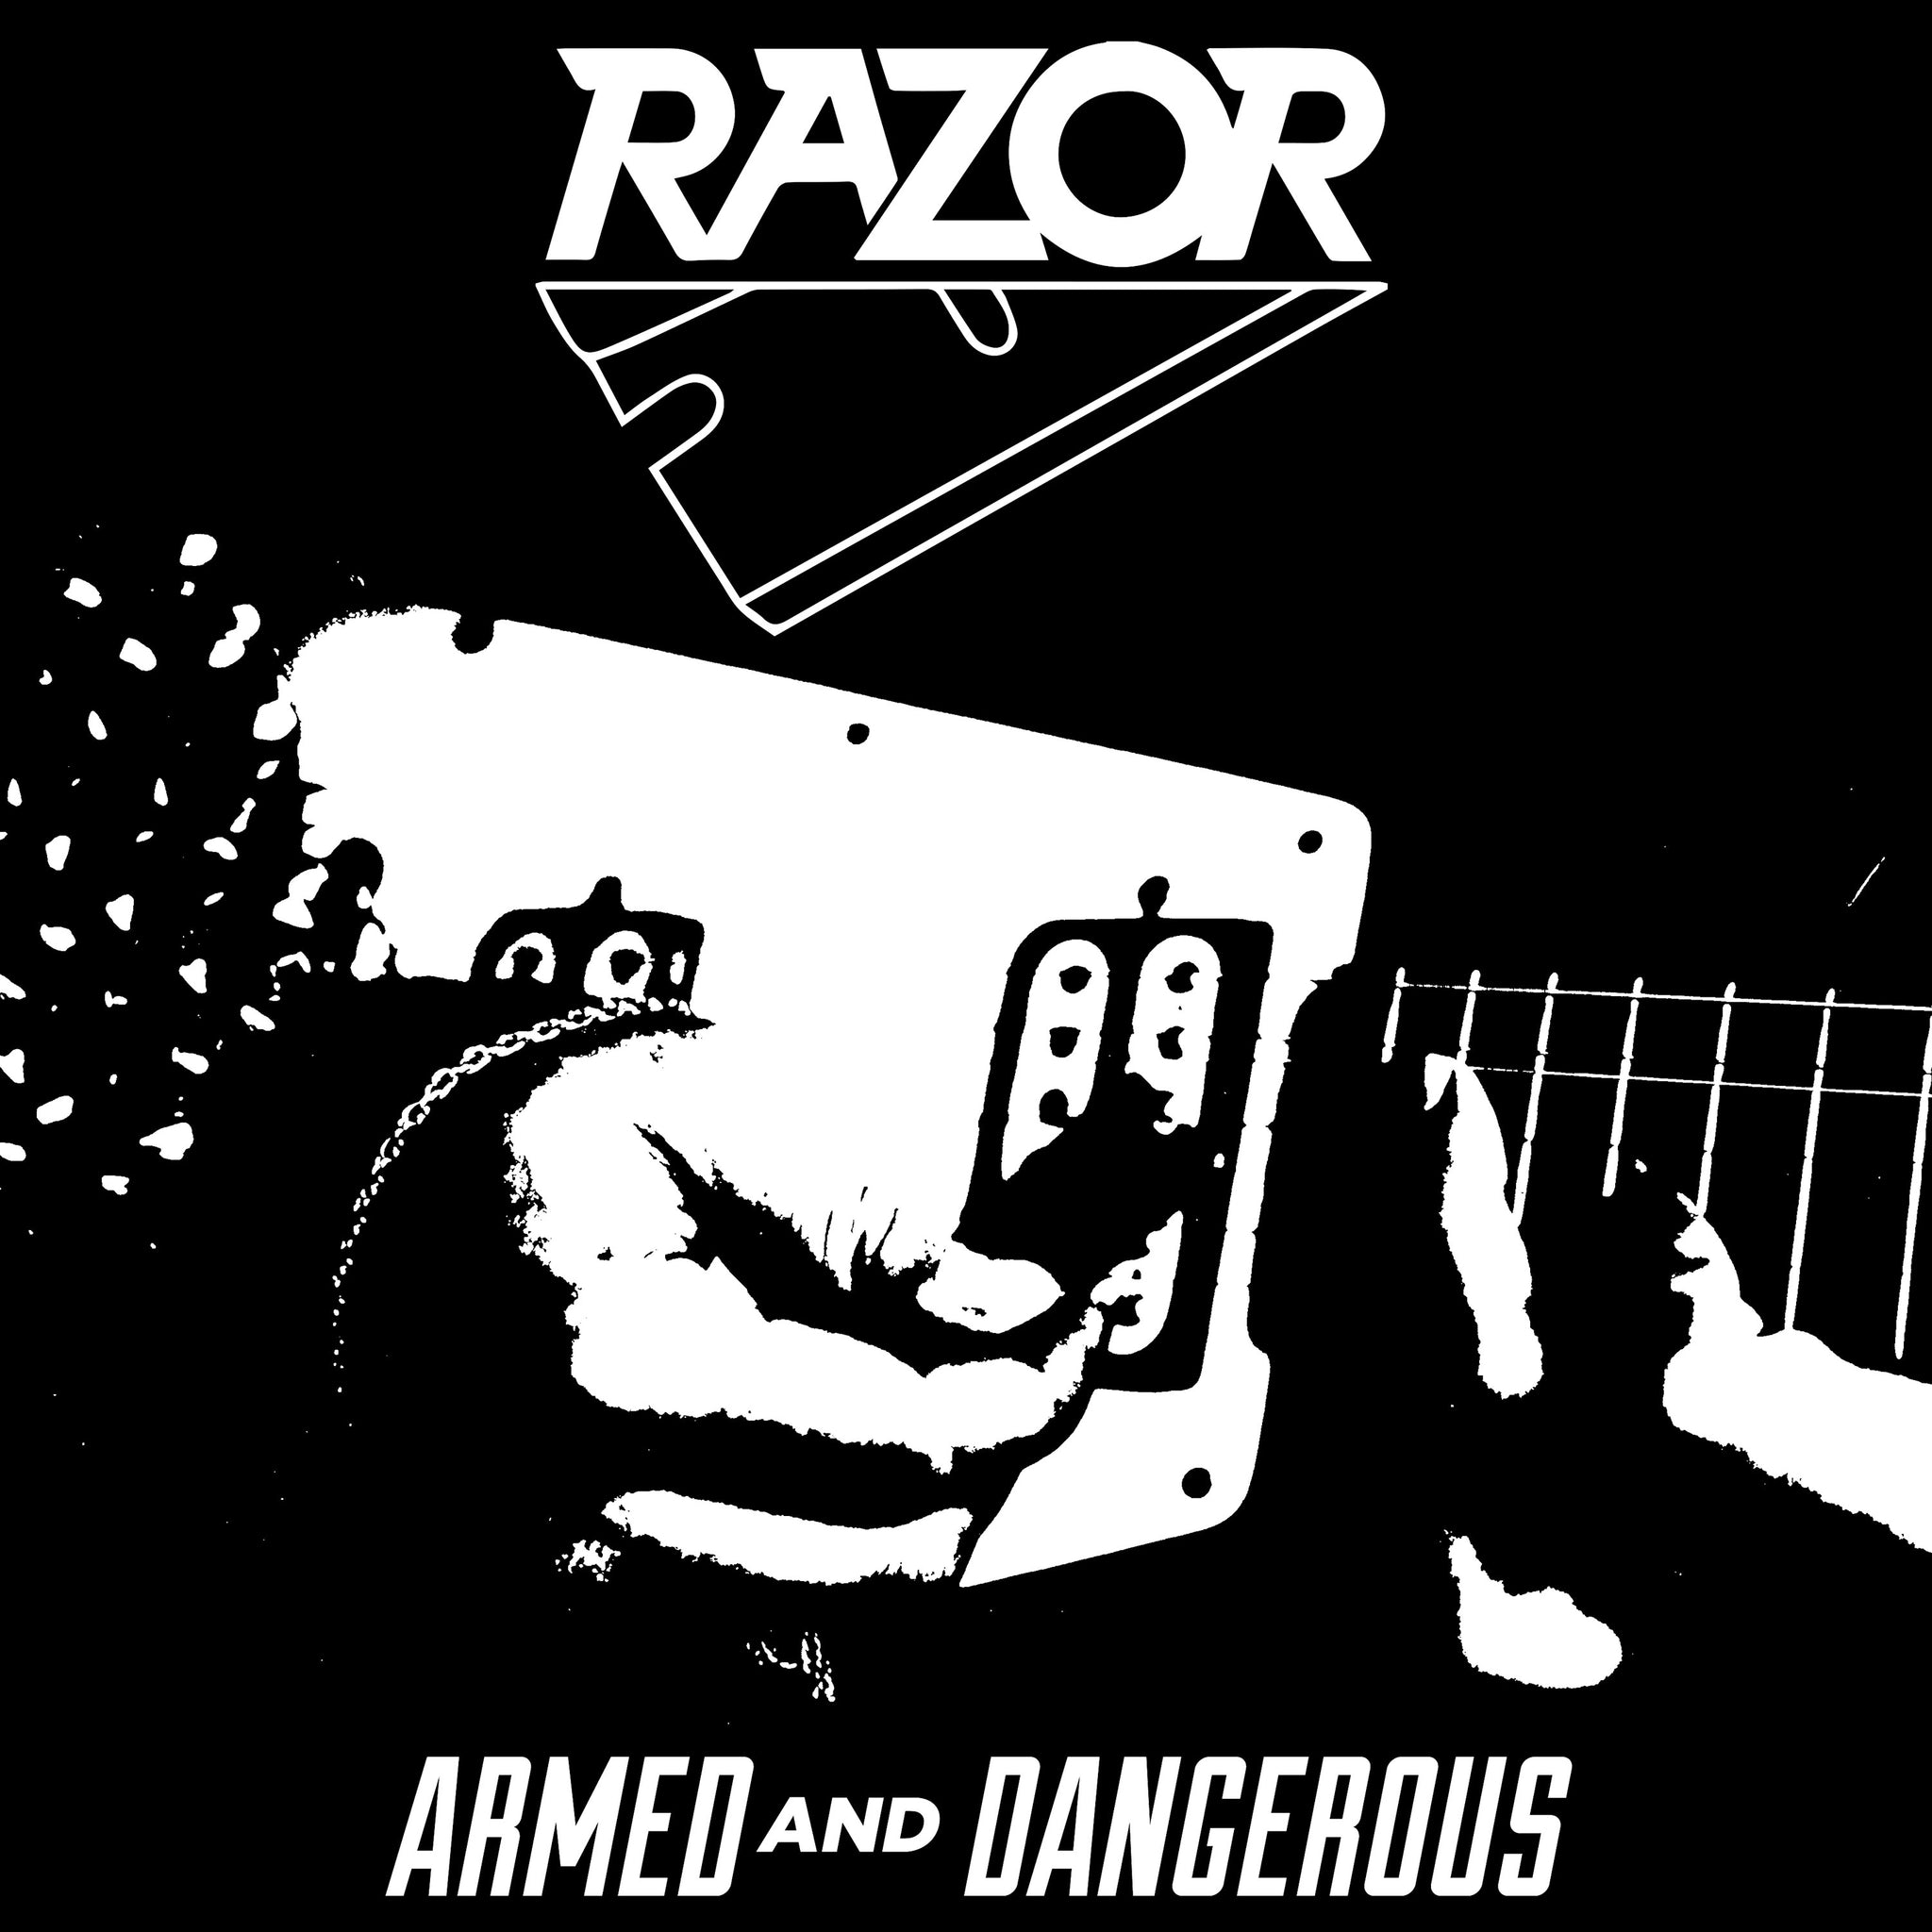 RAZOR - ARMED AND DANGEROUS Vinyl LP